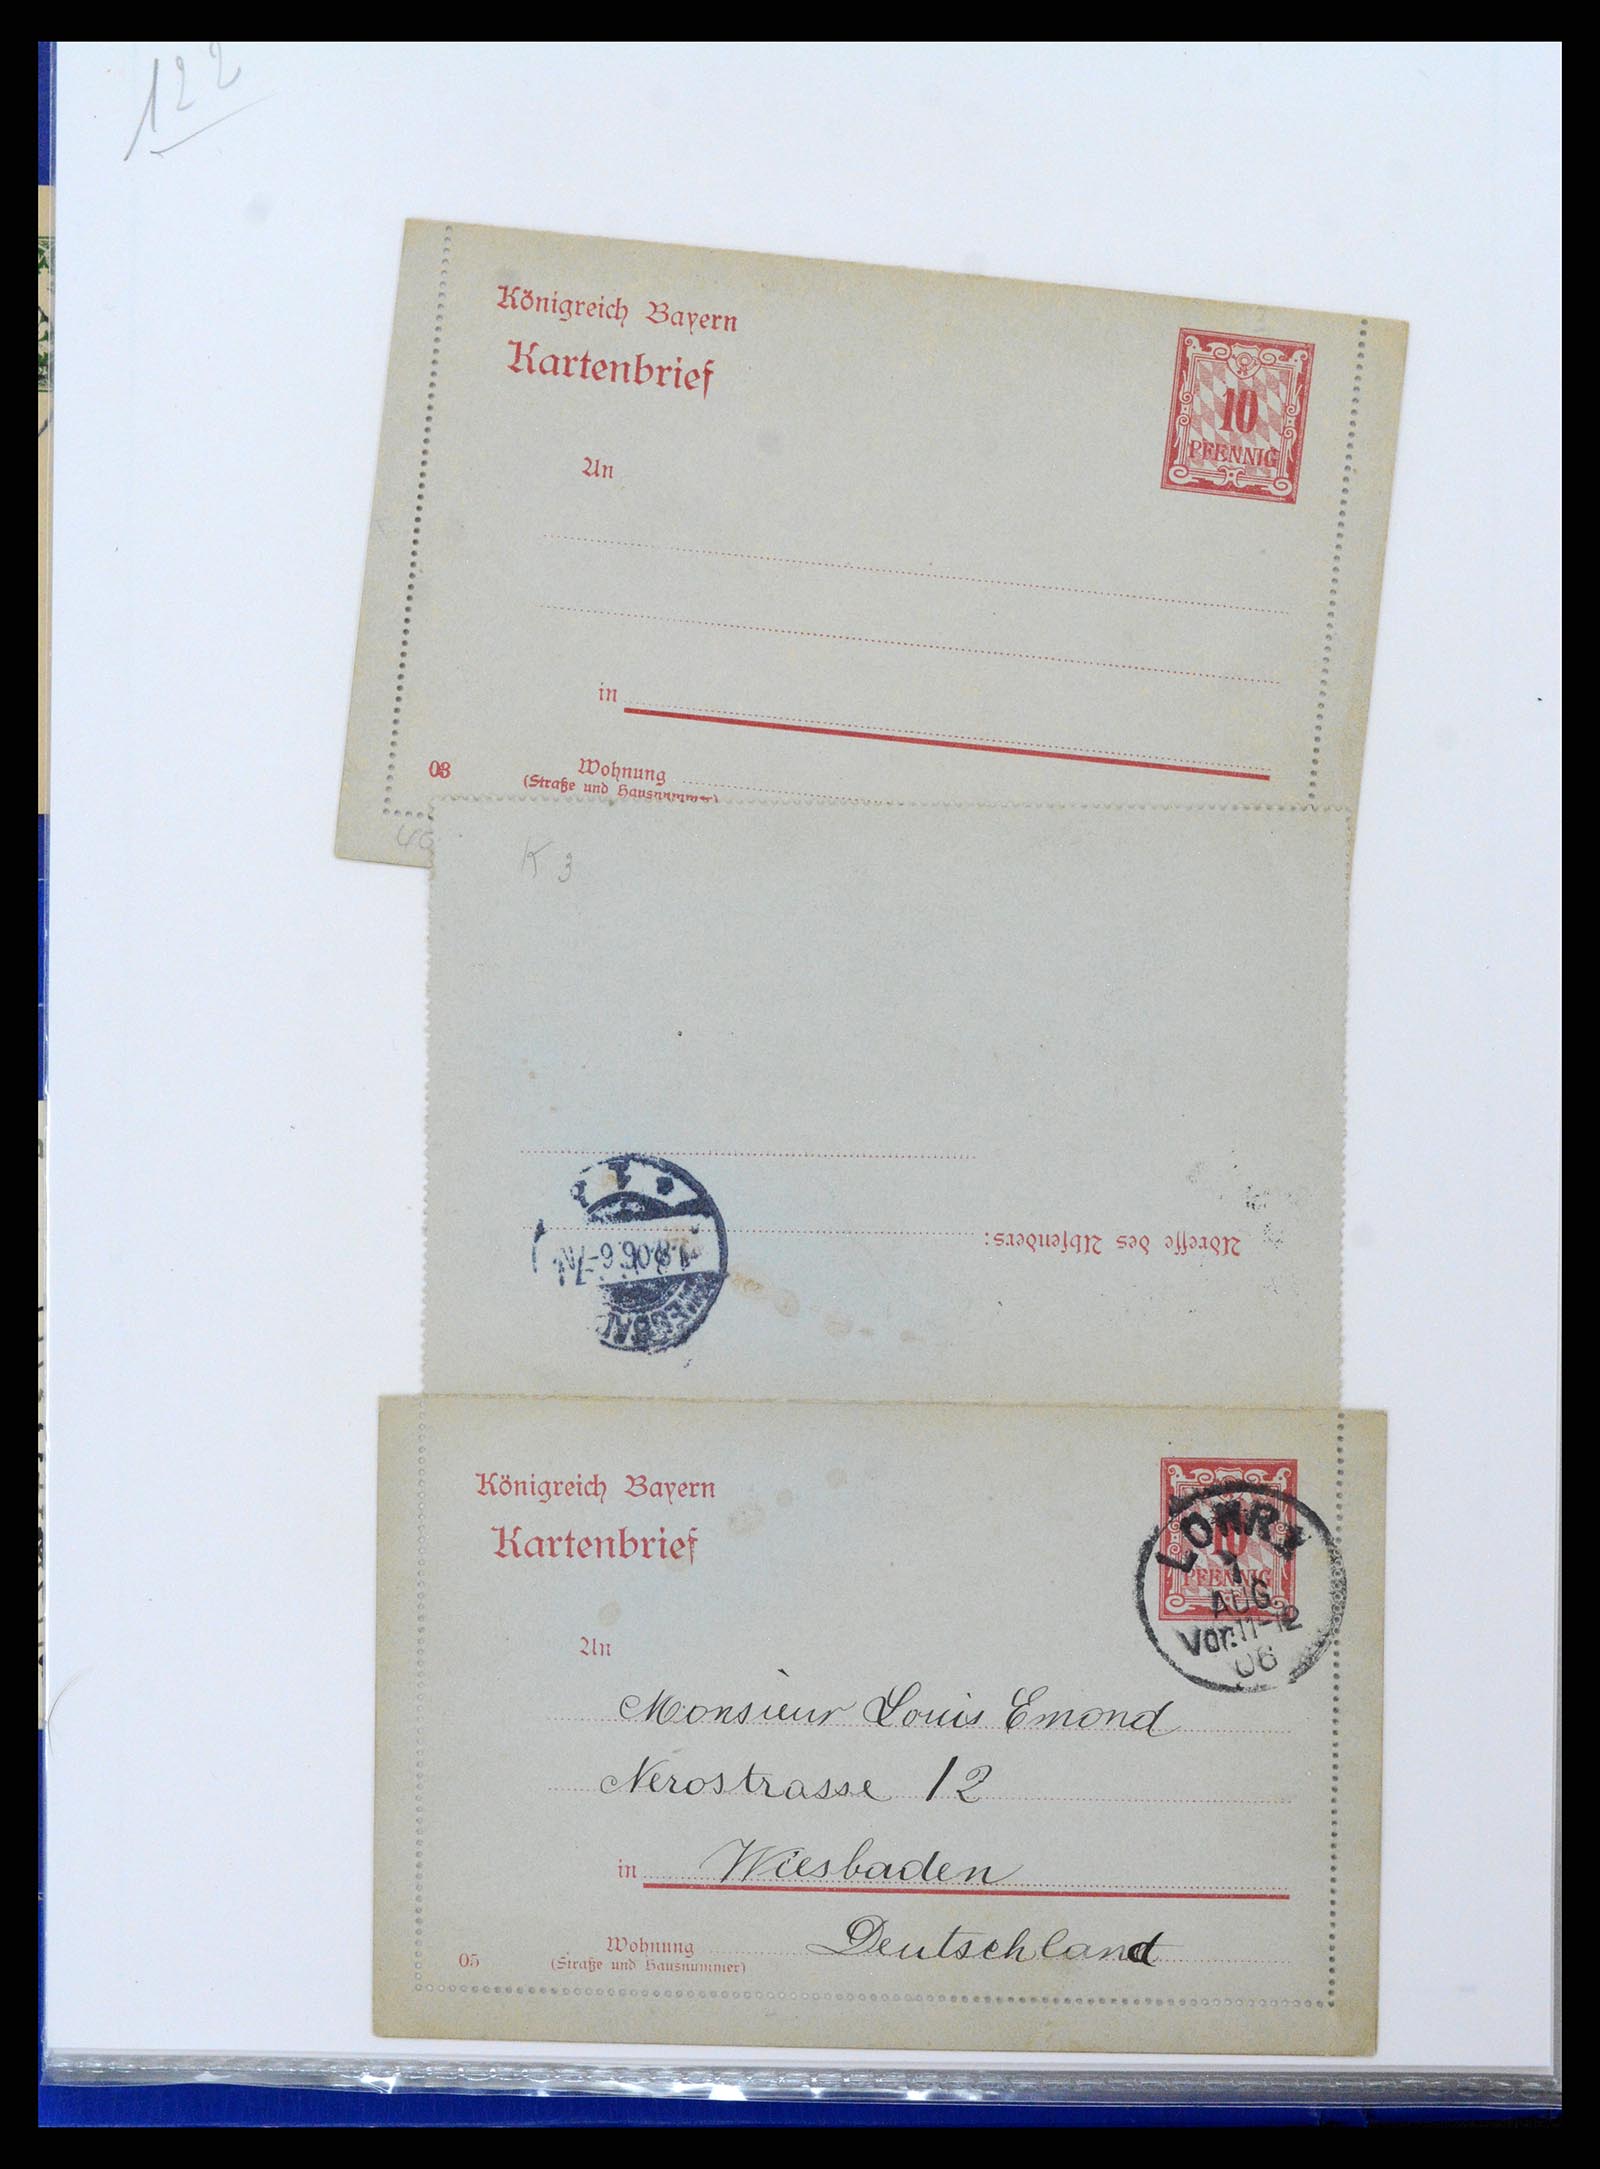 37097 206 - Stamp collection 37097 Bavaria postal stationeries 1870-1920.